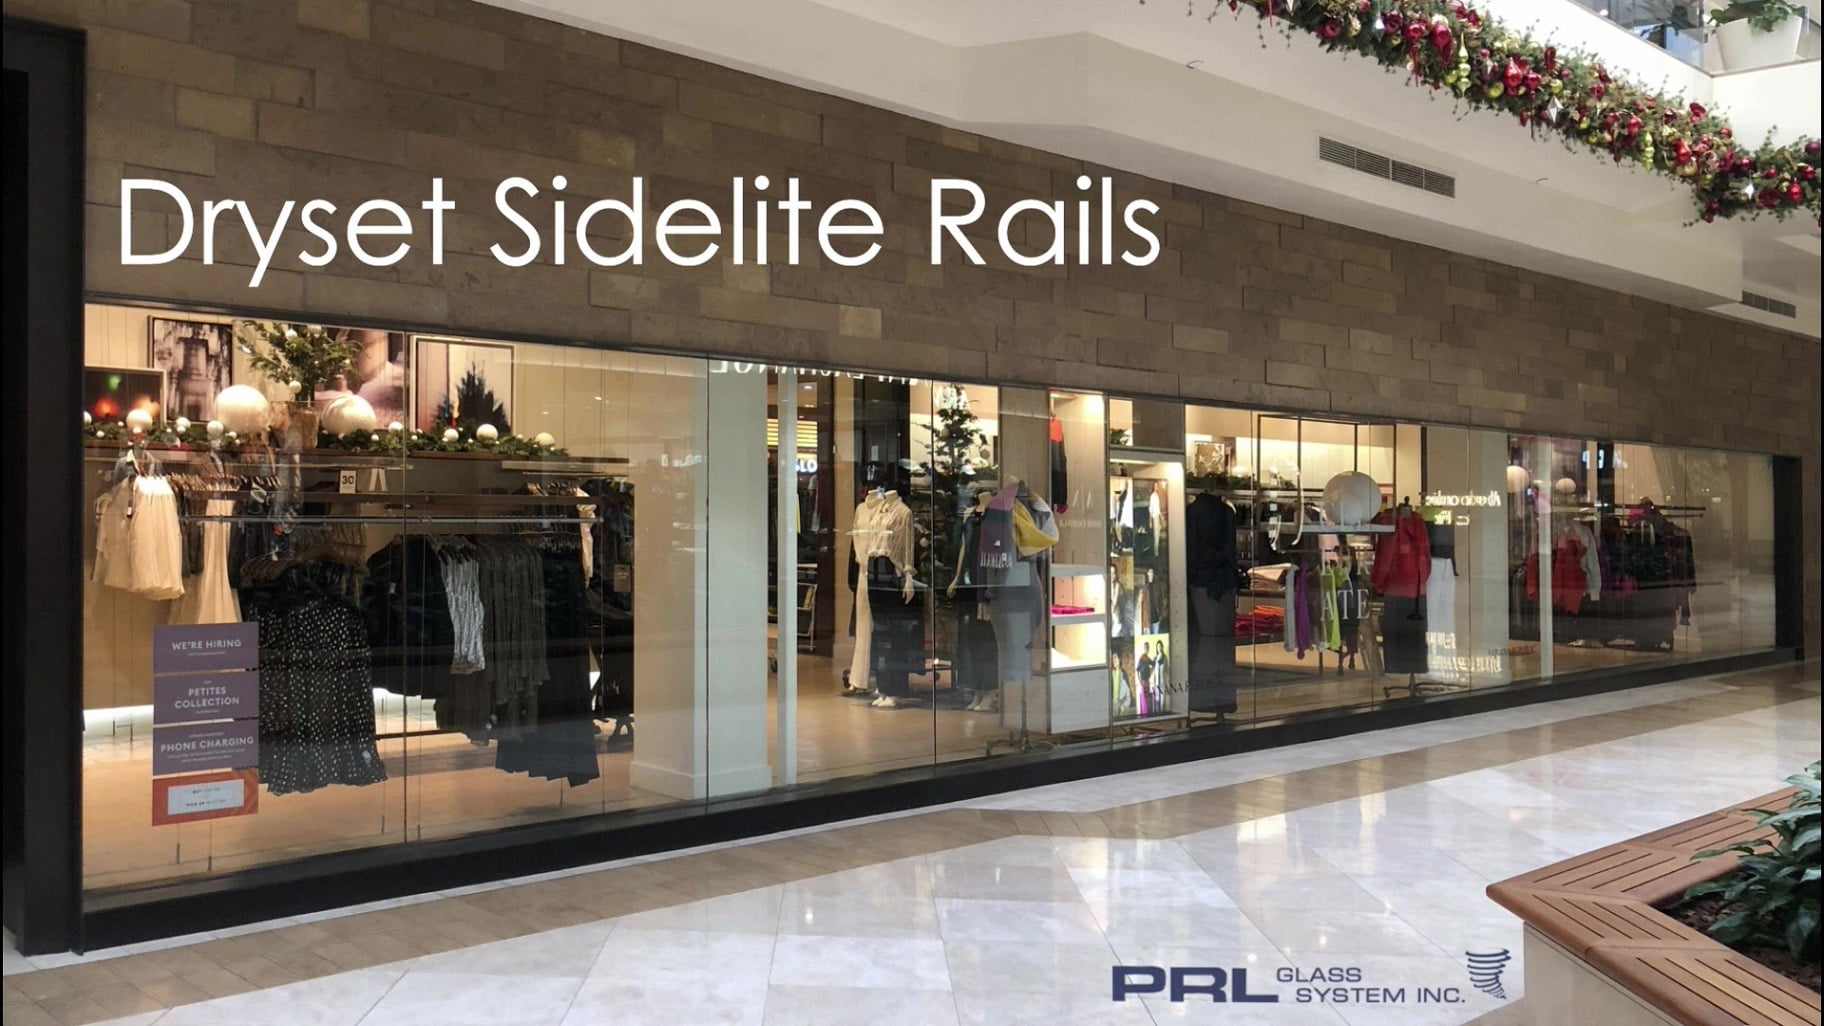 Dryset Sidelite Rails Video